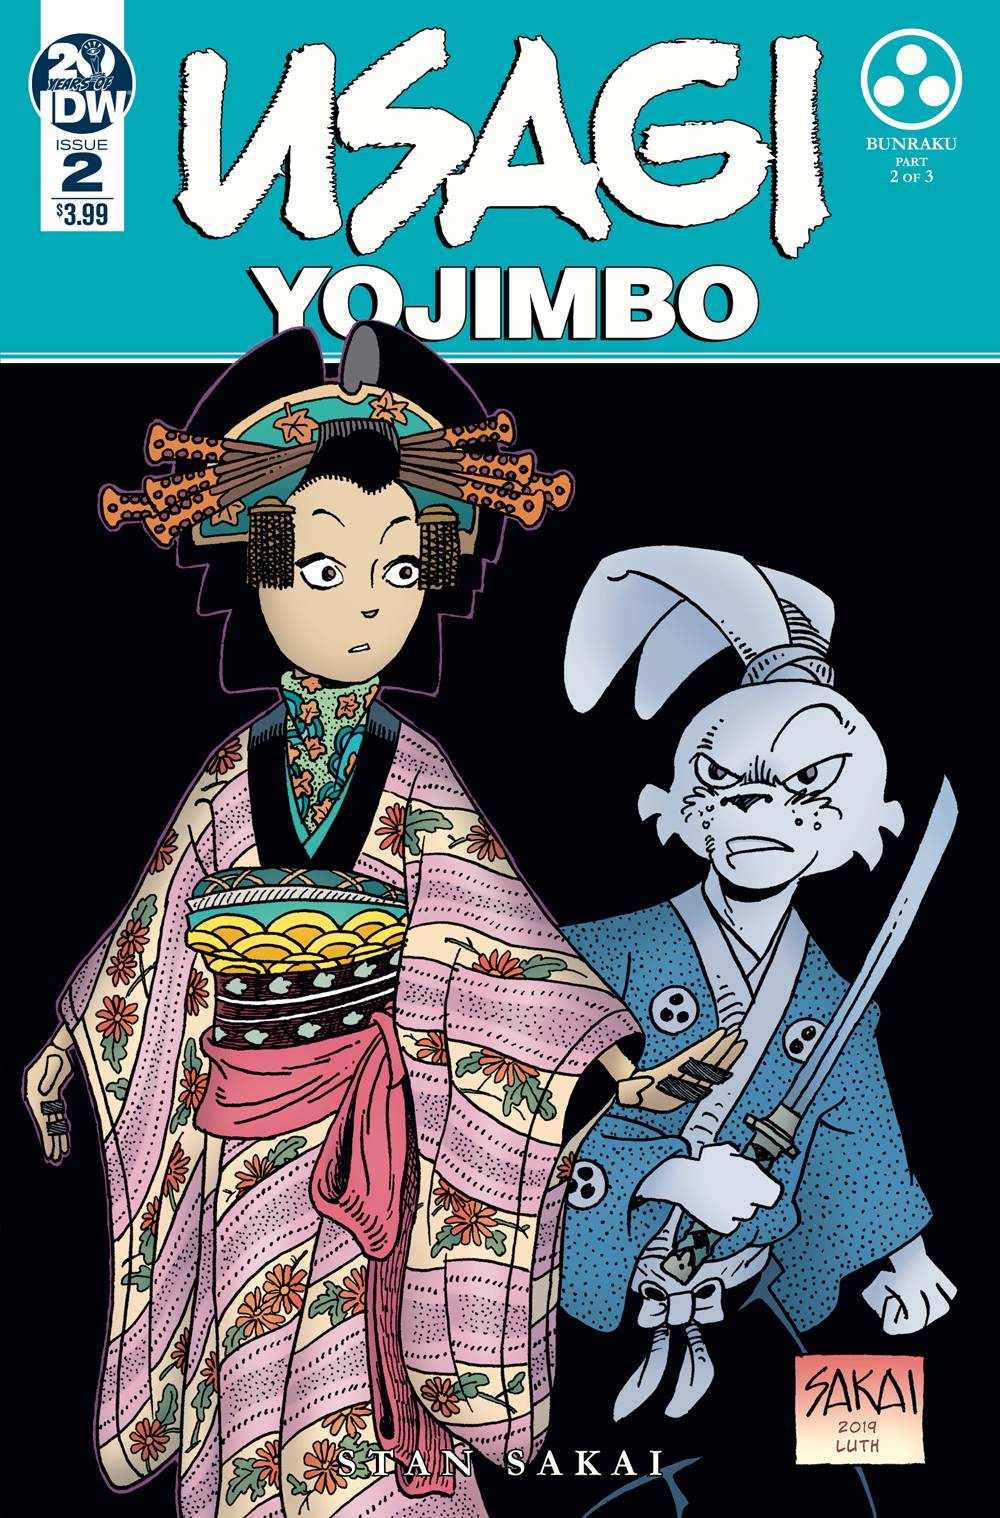 Usagi Yojimbo #2 Cover A Sakai (2019)